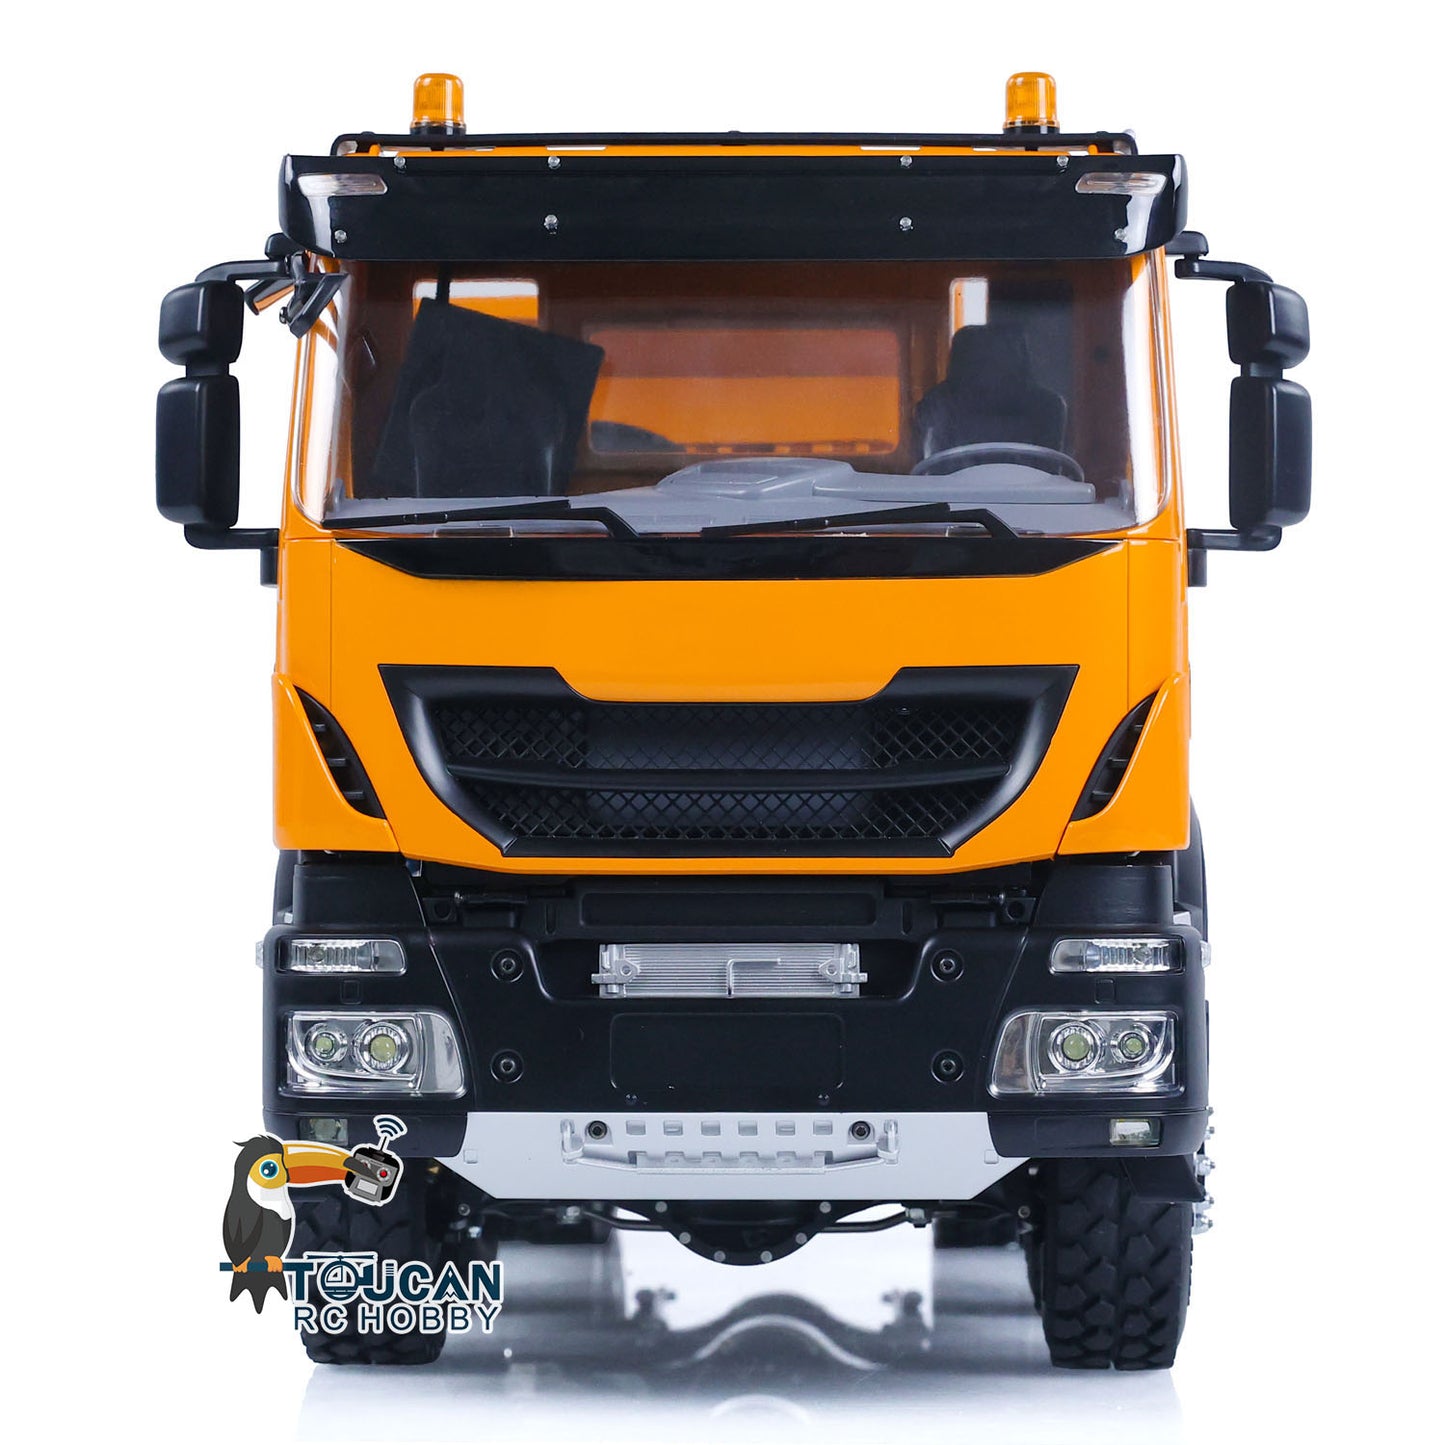 1/14 LESU 8X8 Metal RC Hydraulic Dump Truck Remote Control Tipper Dumper Simulation Car Hobby Model DIY 20150731 PNP/RTR